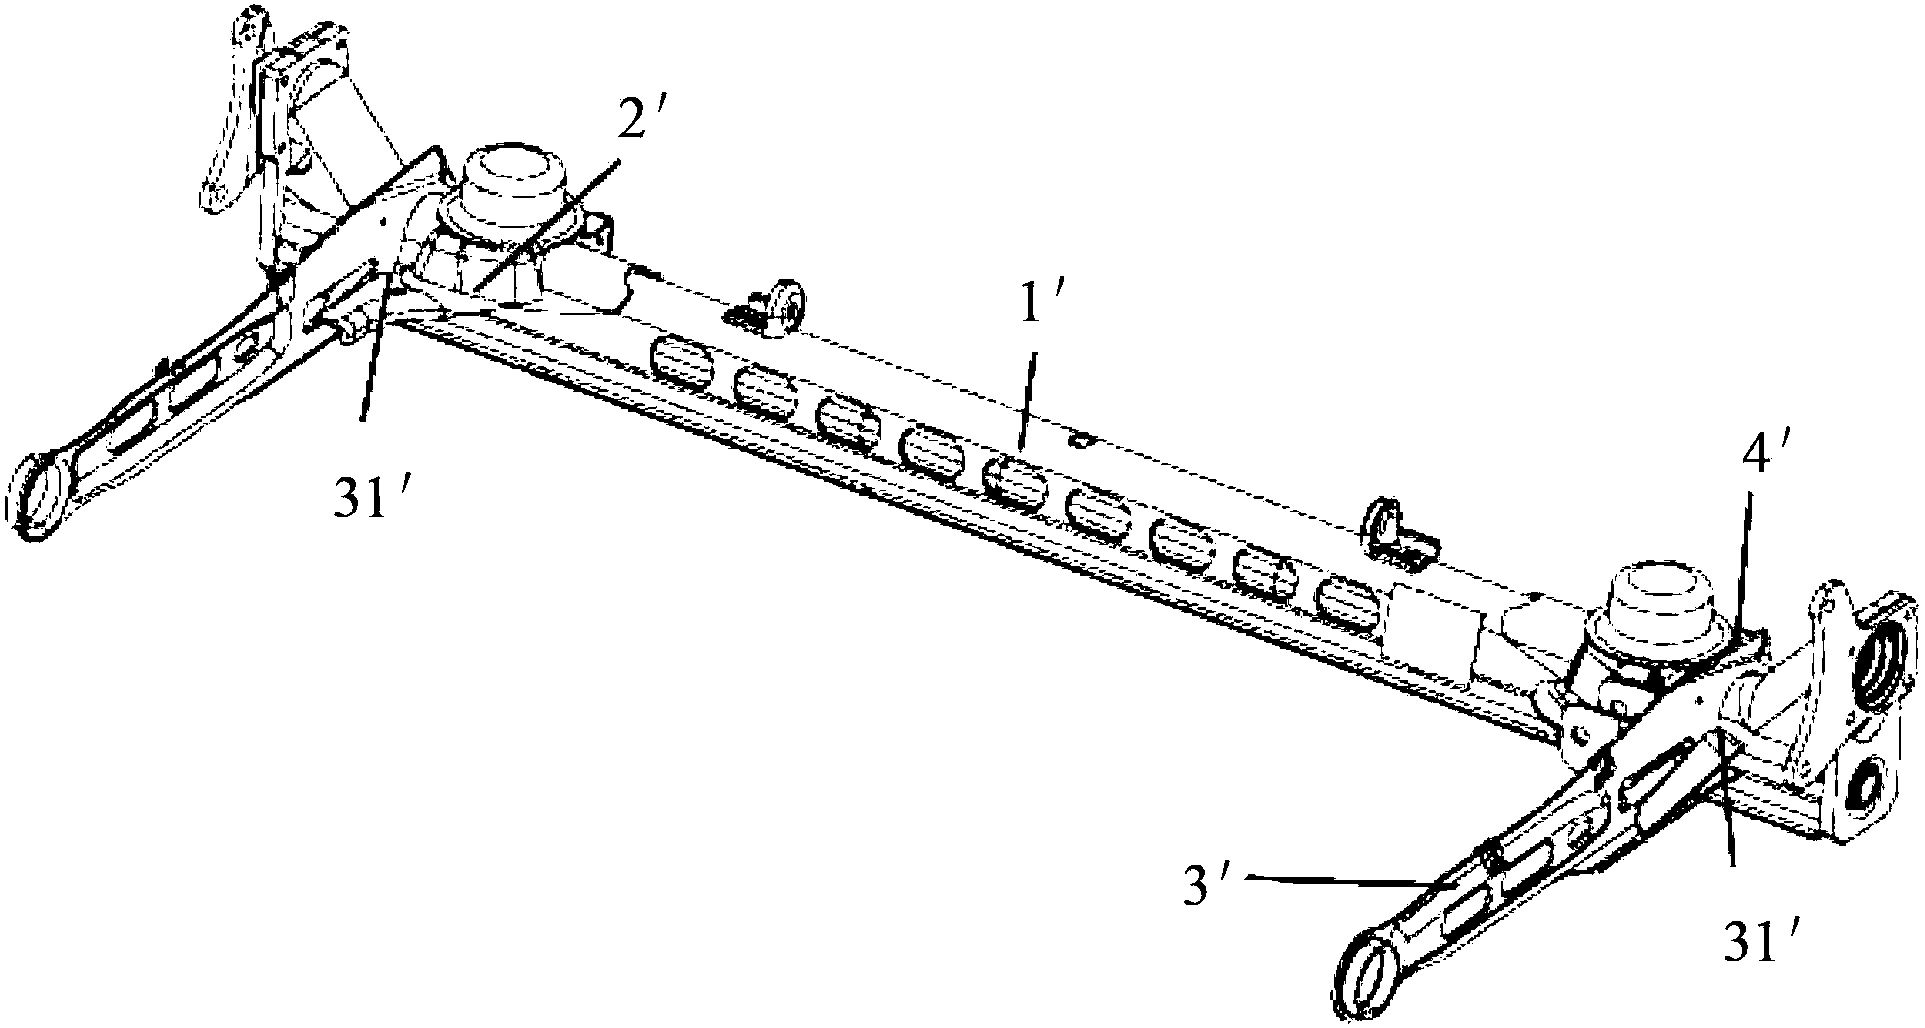 High-load rear axle